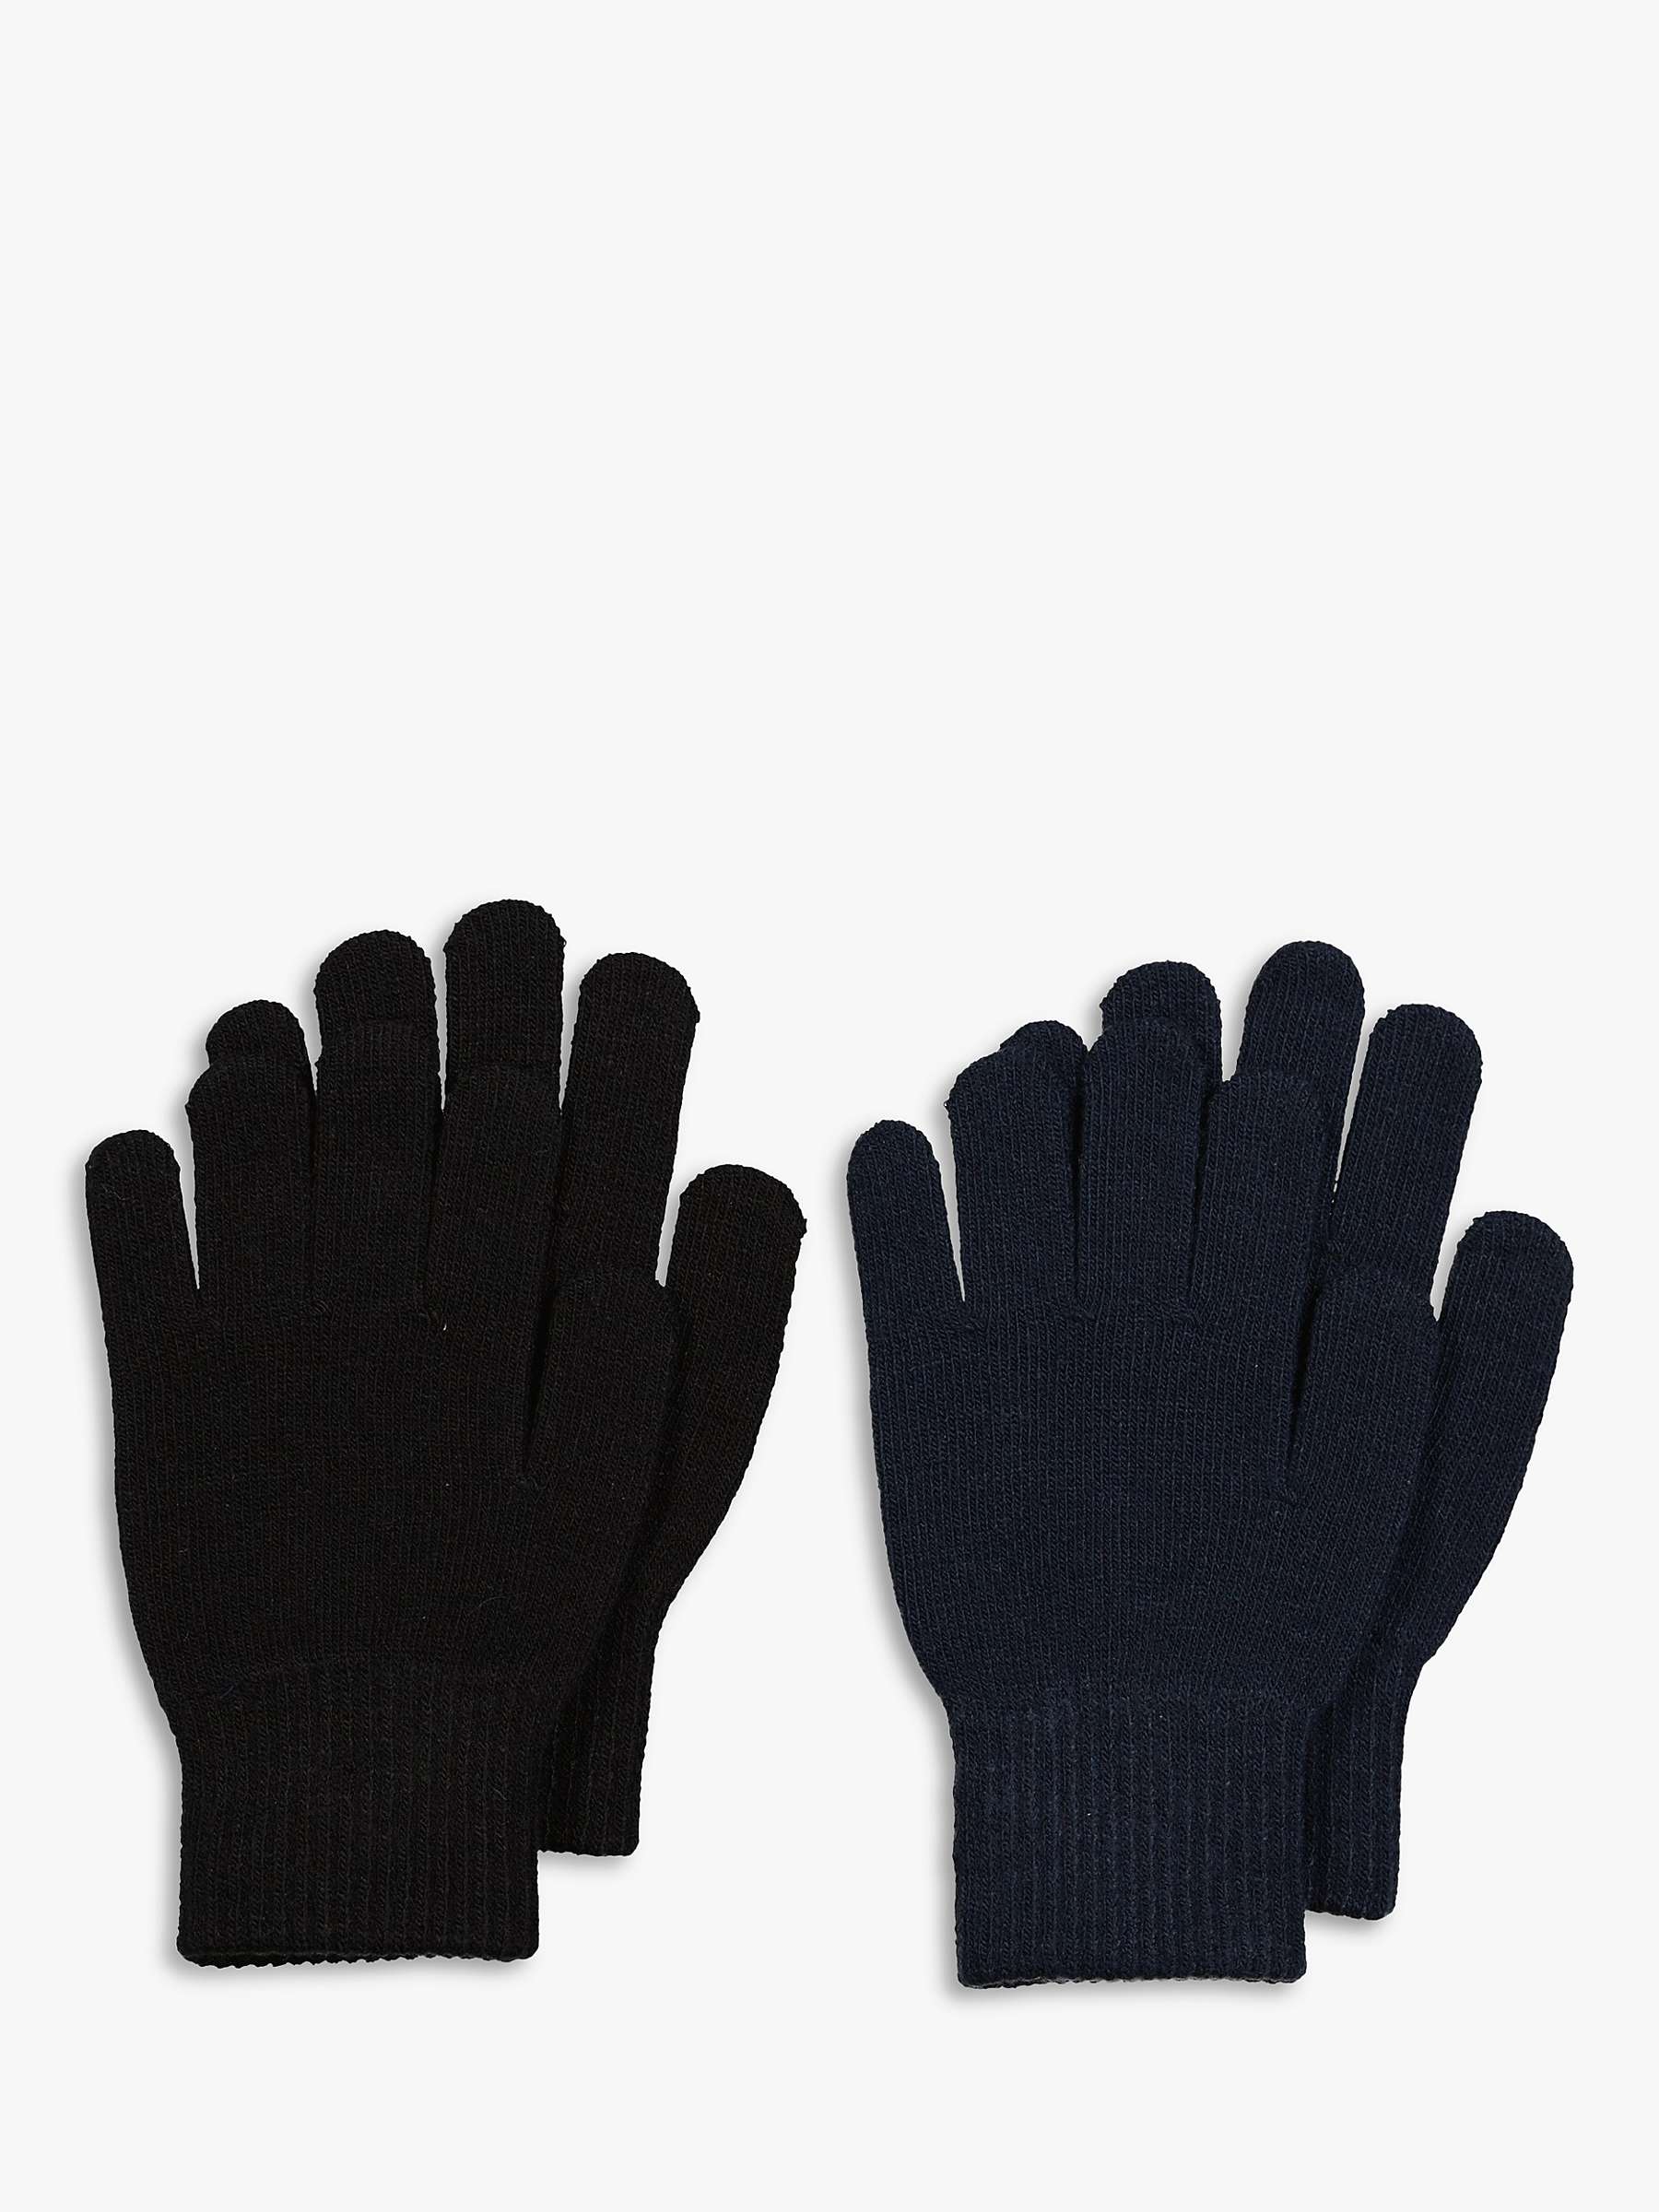 Buy Polarn O. Pyret Kids' Magic Gloves, Pack of 2, Black Online at johnlewis.com